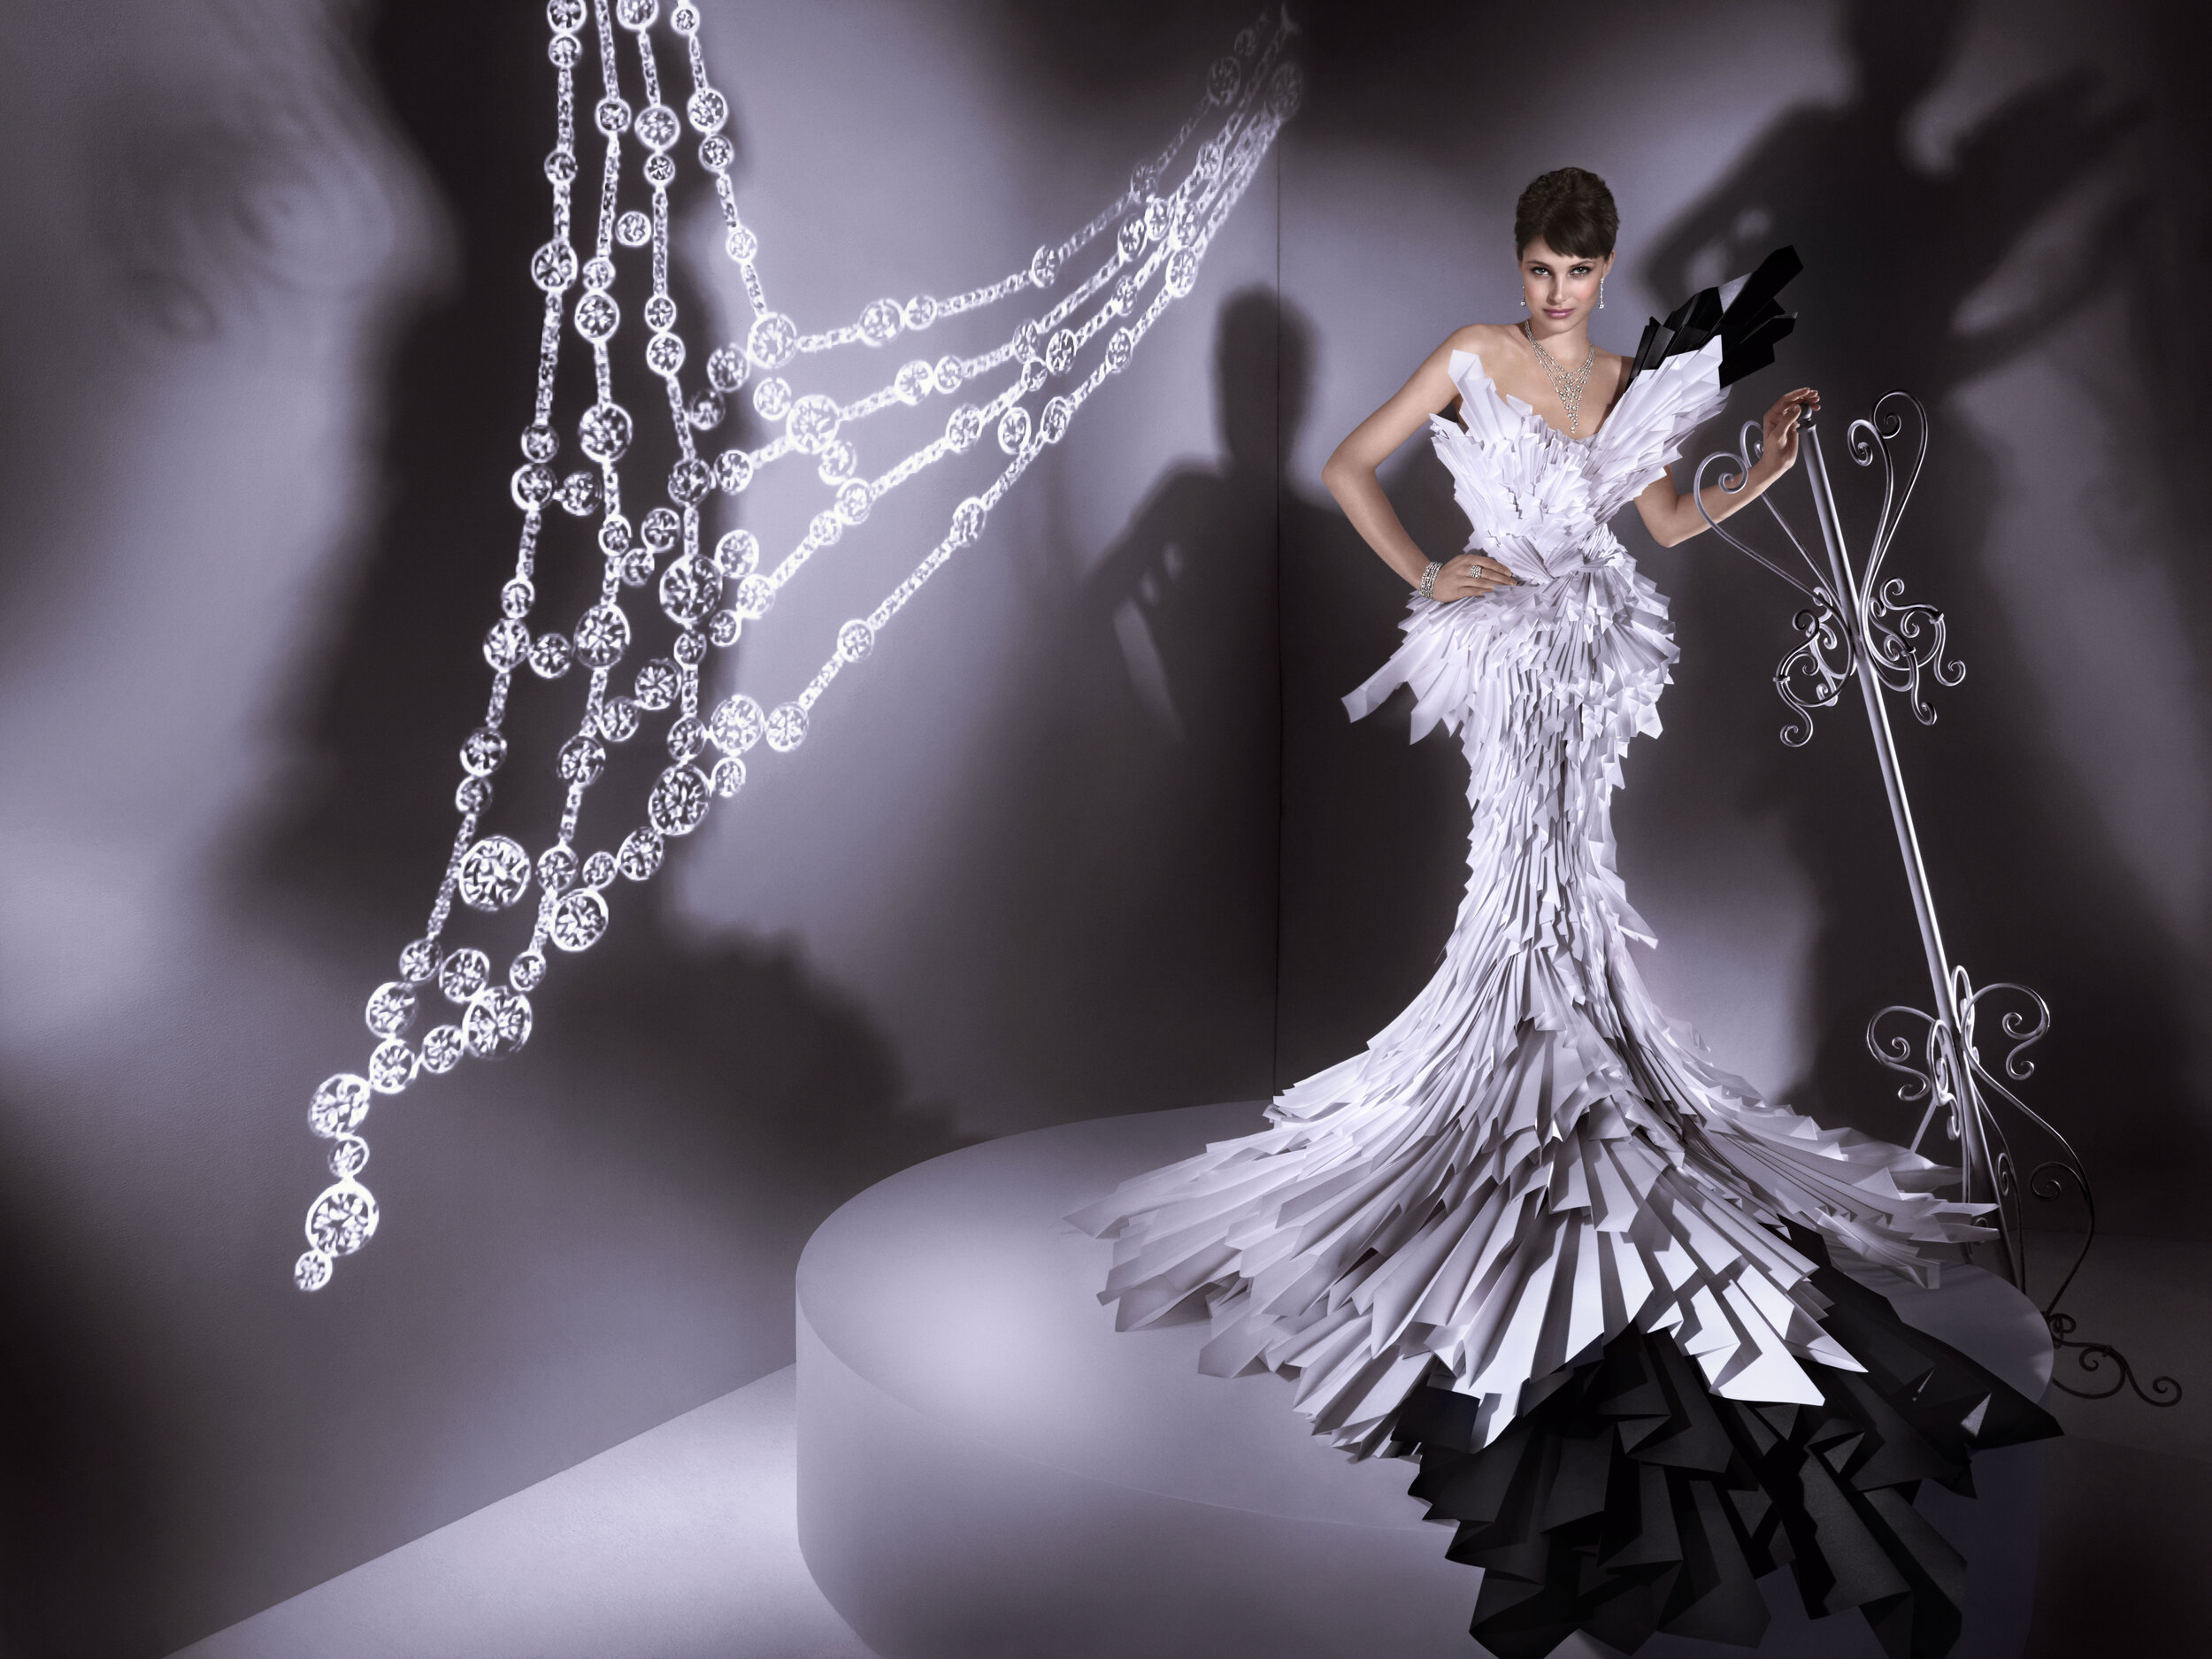 boodles-zoebradley-jewellery-set-design-paper-dresses-couture-fashion3.jpg